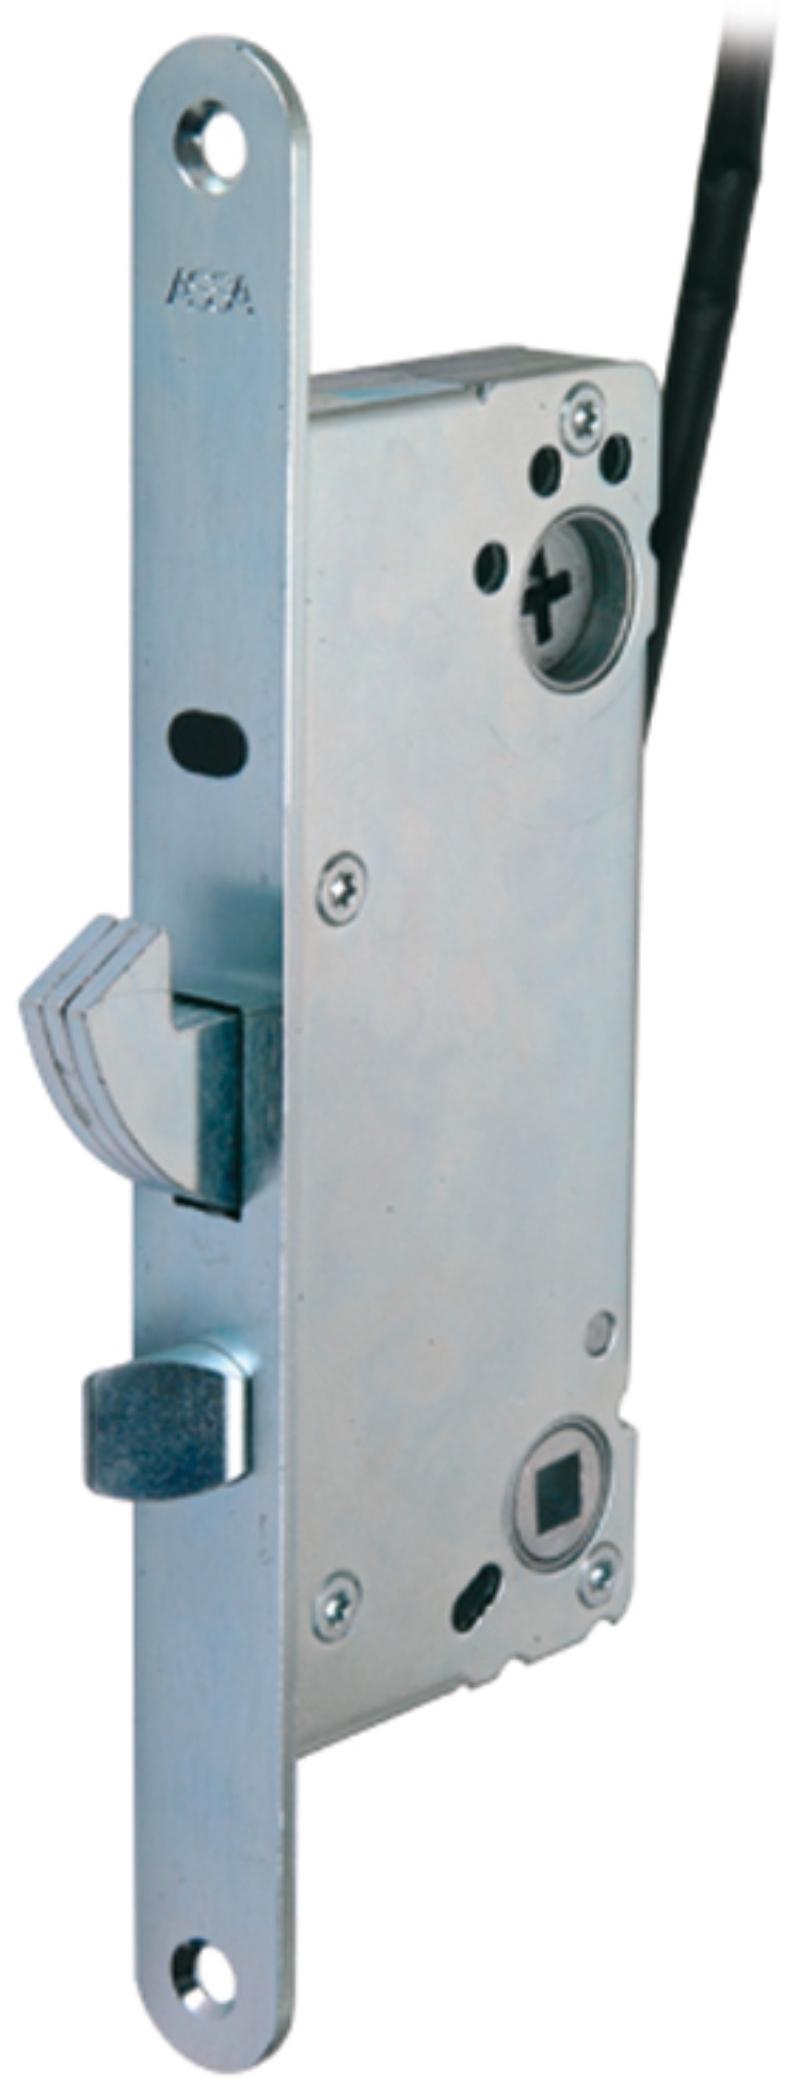 Assa motor lock Connect 810s/50 lock box (968808)